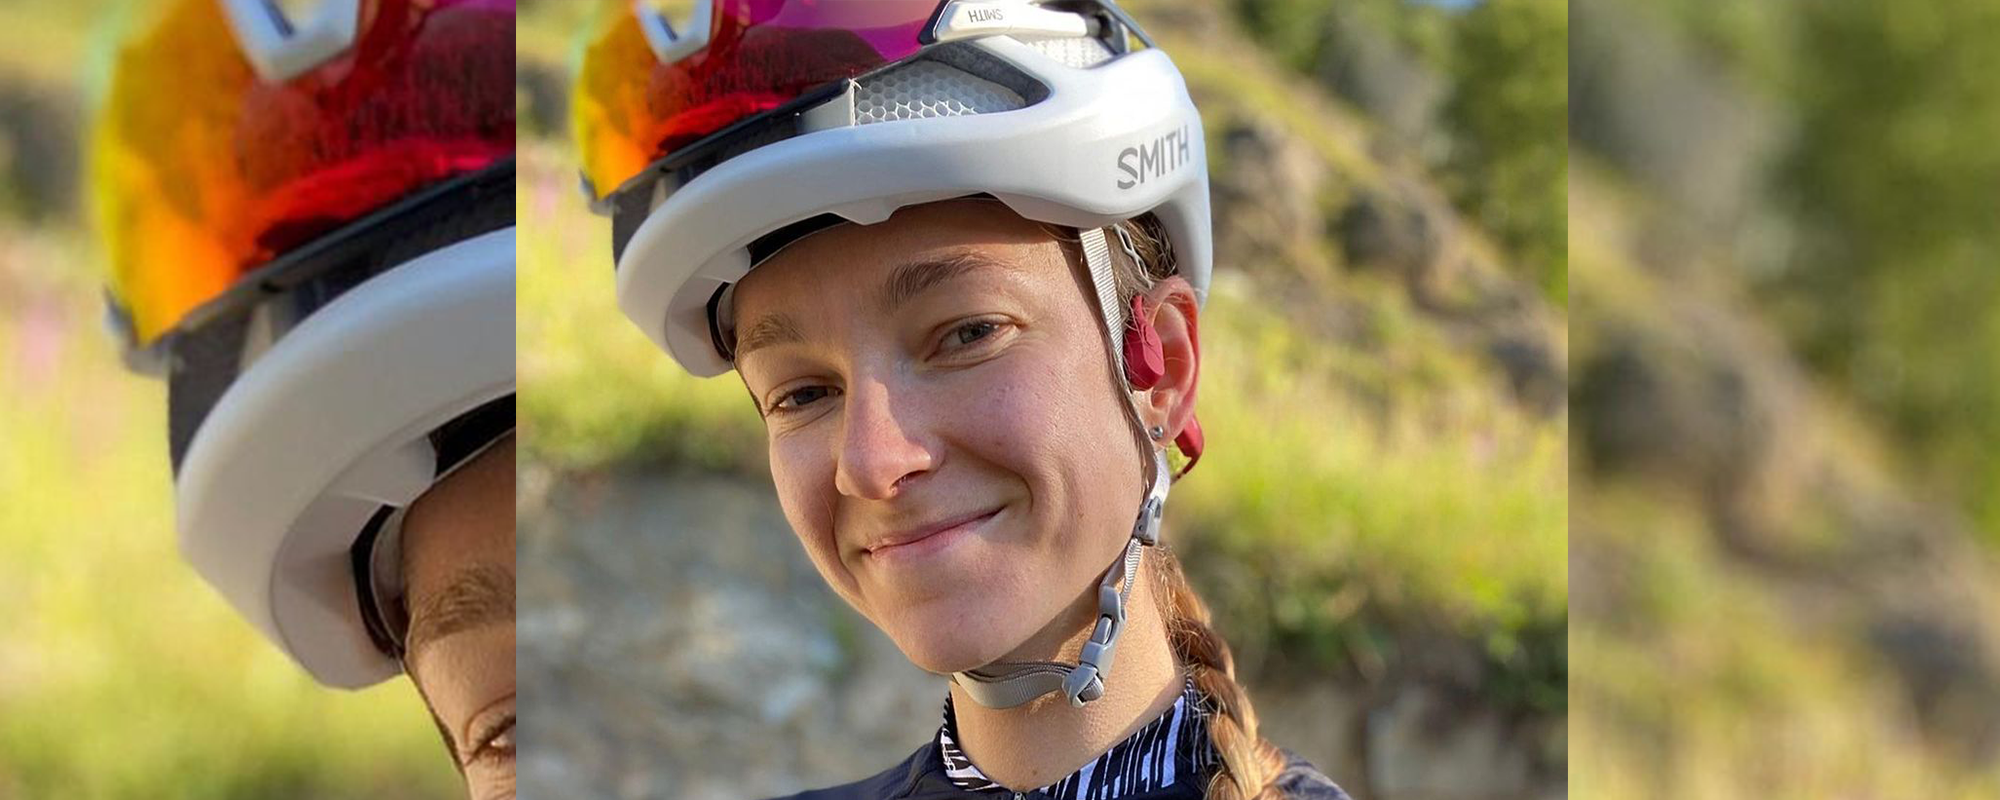 Canadian Olympic cyclist Haley Smith wearing AfterShokz Aeropex wireless headphones